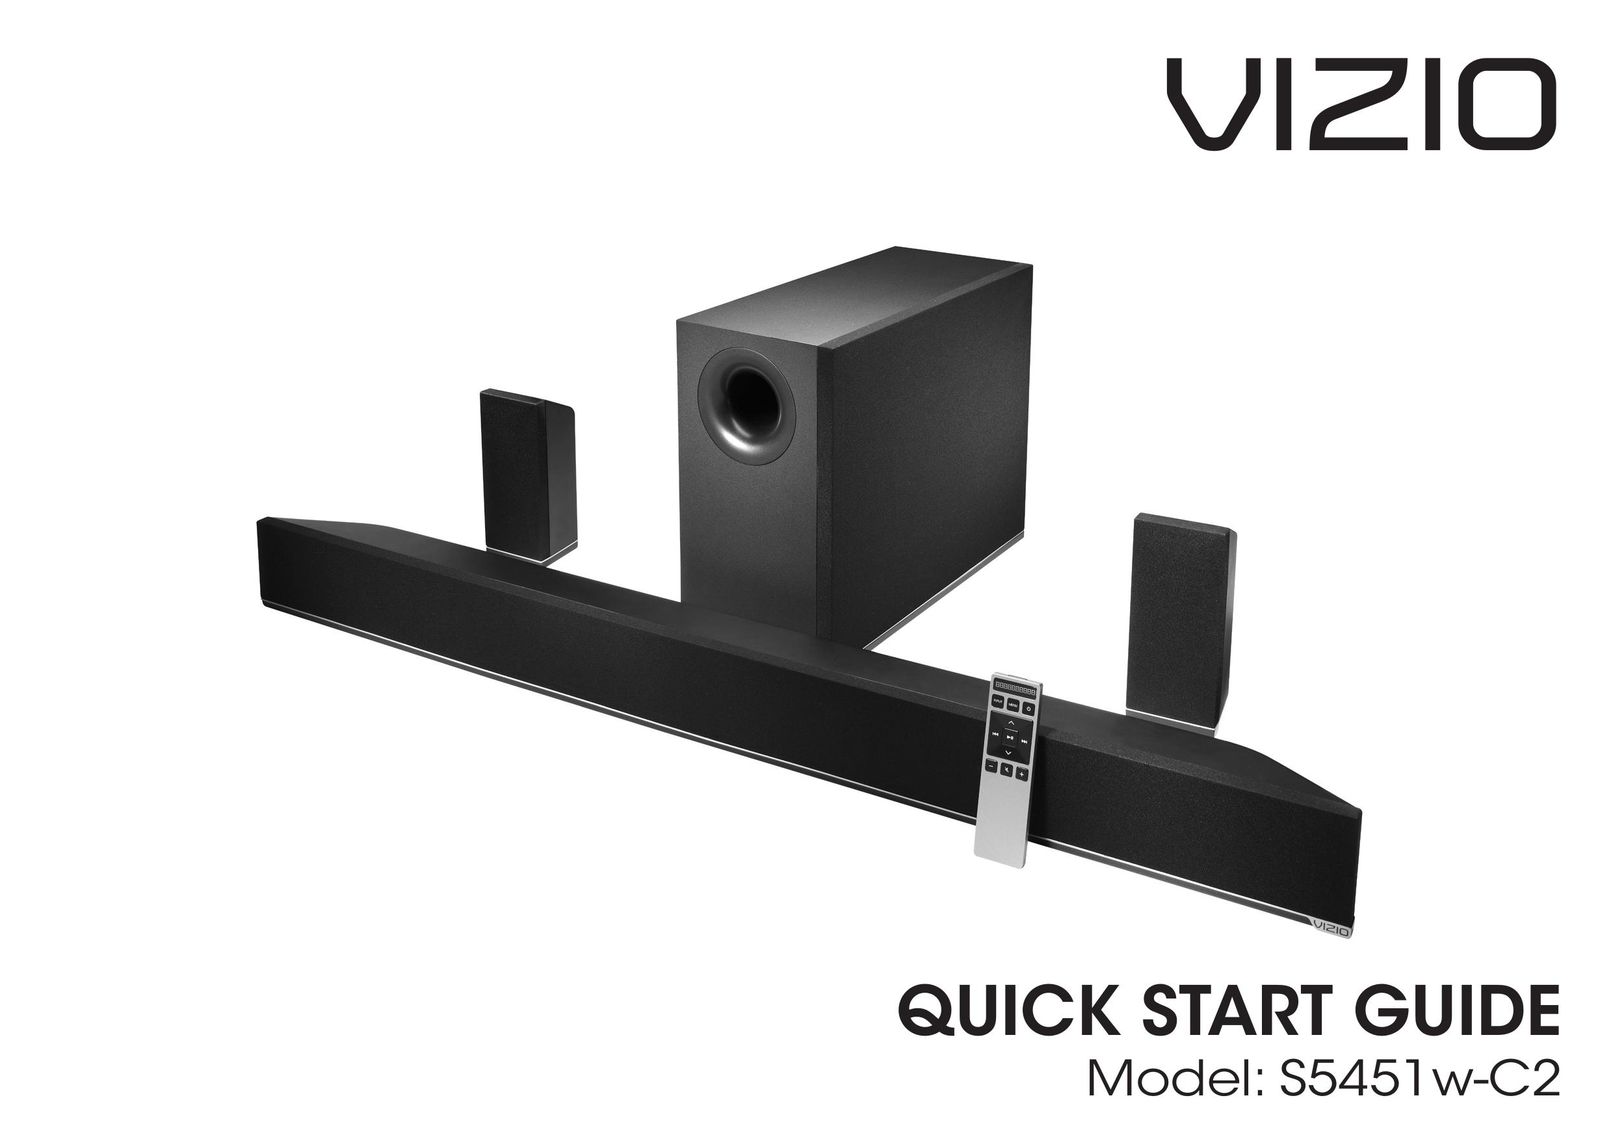 Vizio S5451w-C2 Video Game Sound System User Manual